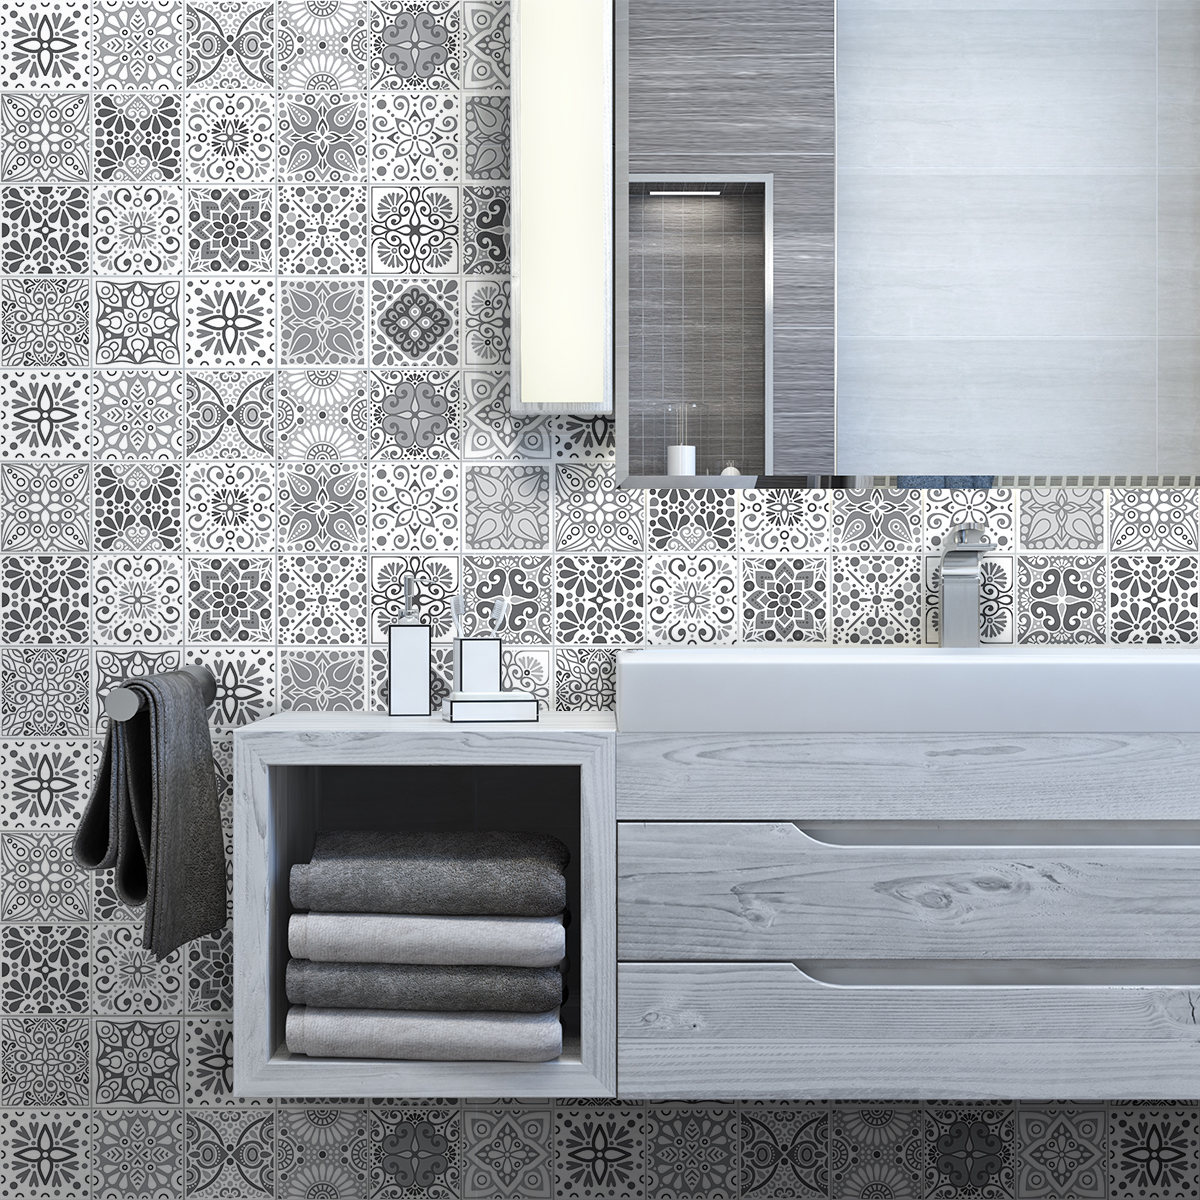 24 wall decal tiles azulejos yasmine